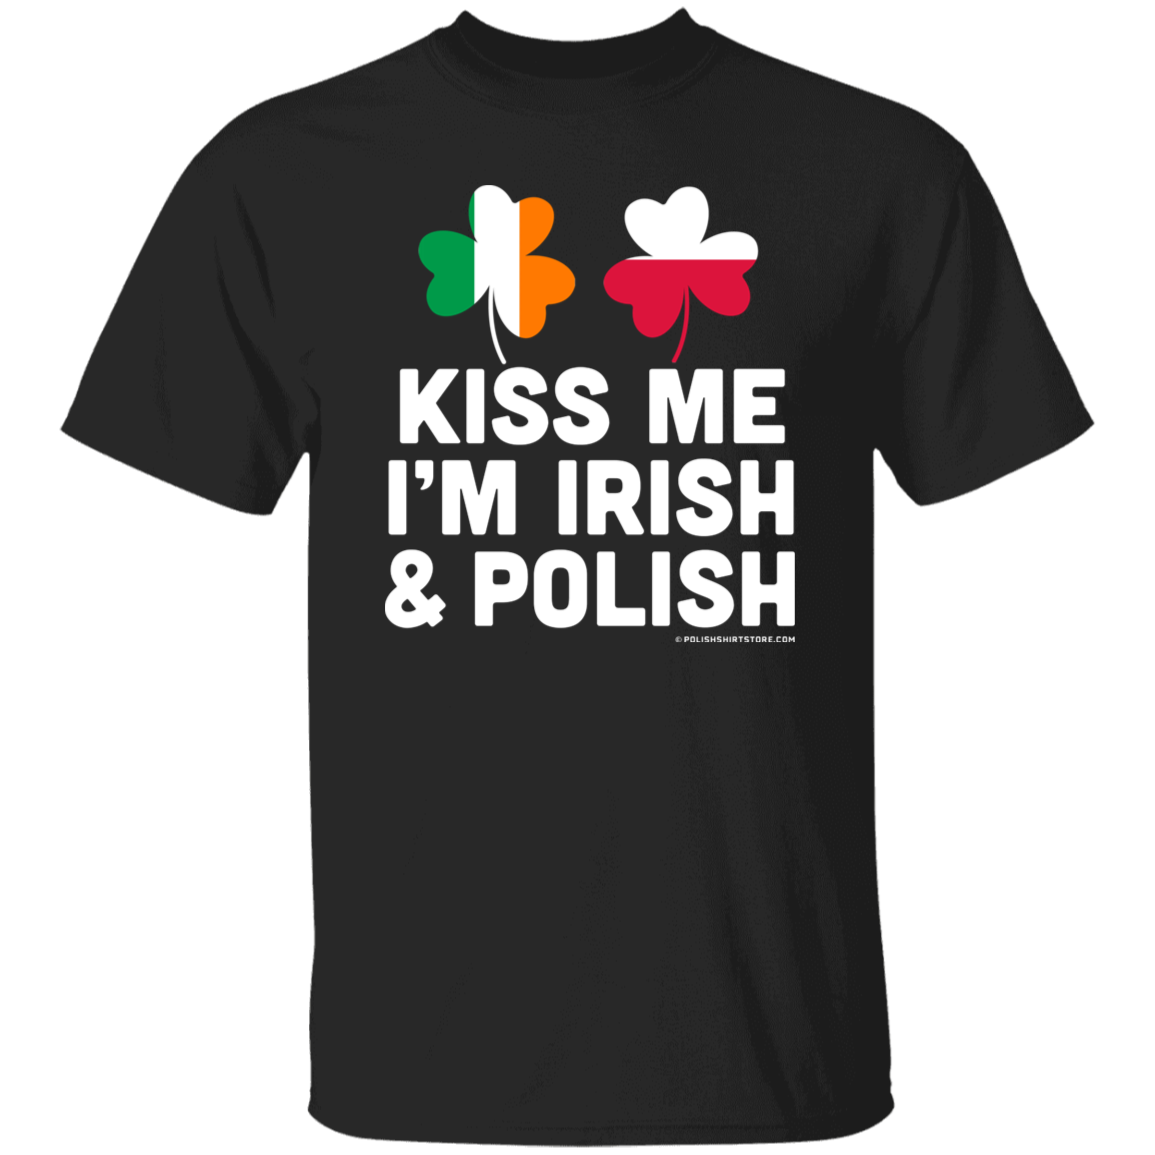 Kiss Me Im Polish and Irish Apparel CustomCat G500 5.3 oz. T-Shirt Black S